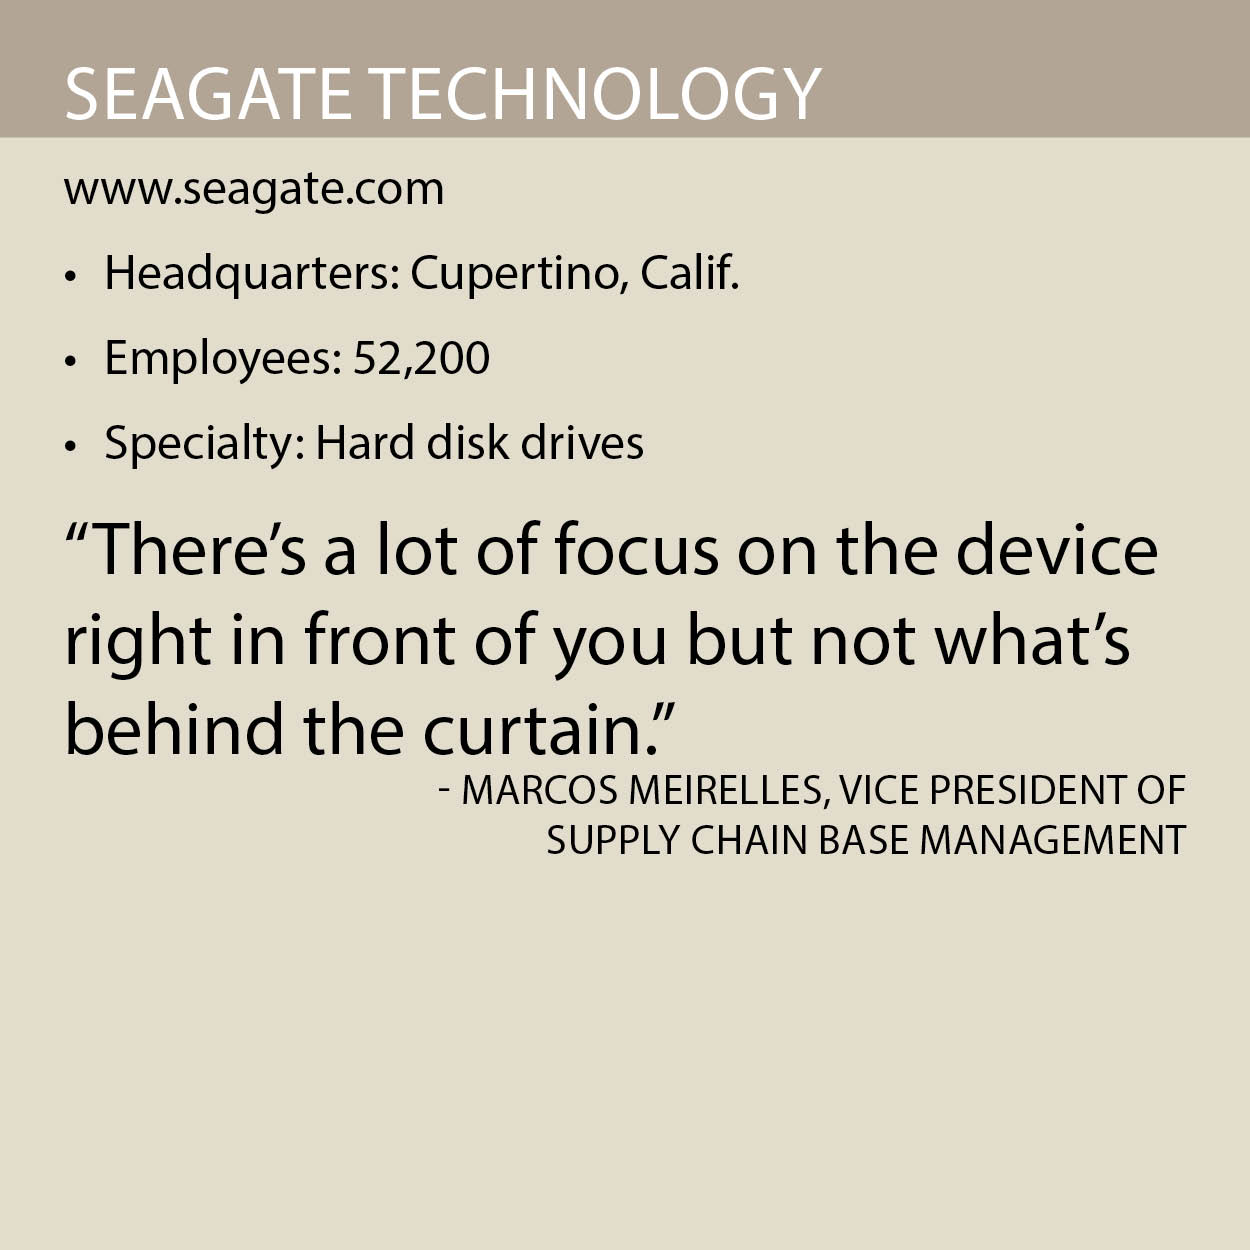 Seagate Technology info